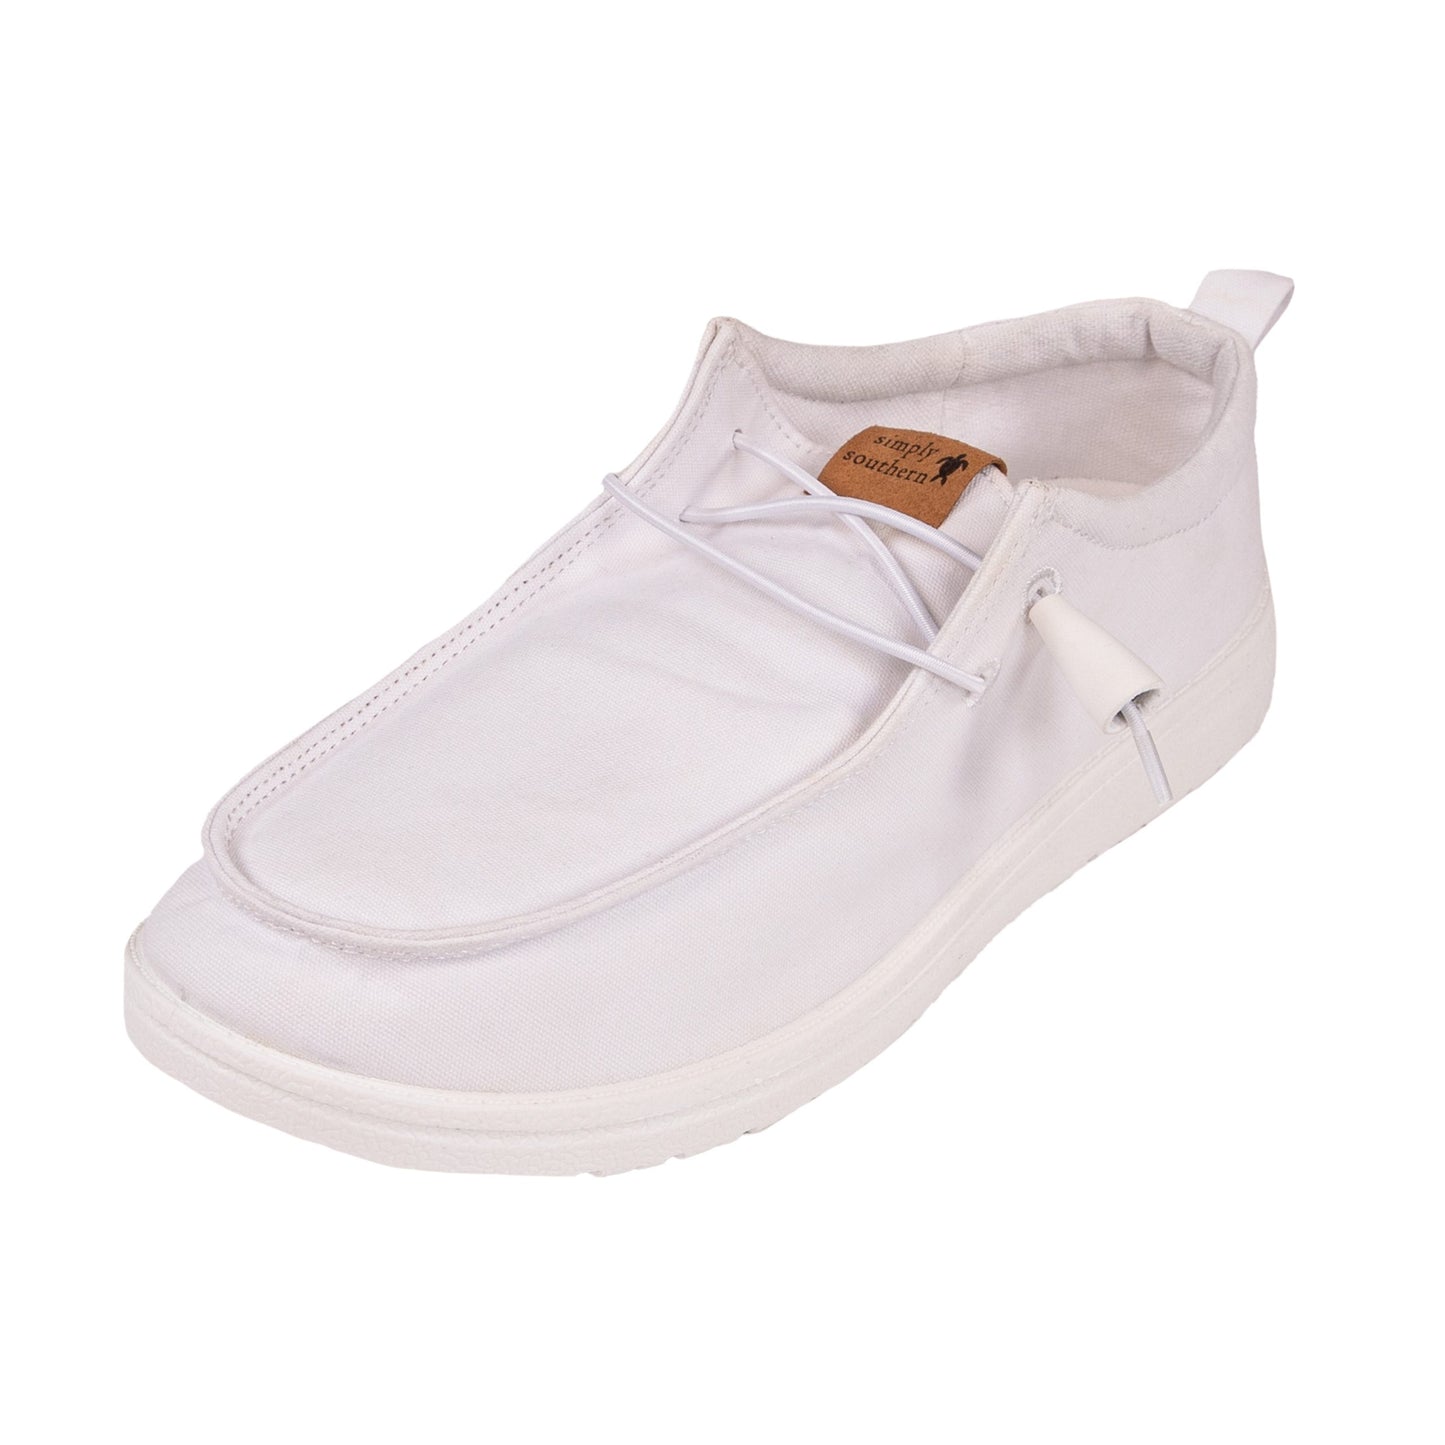 Slip On Shoes - White